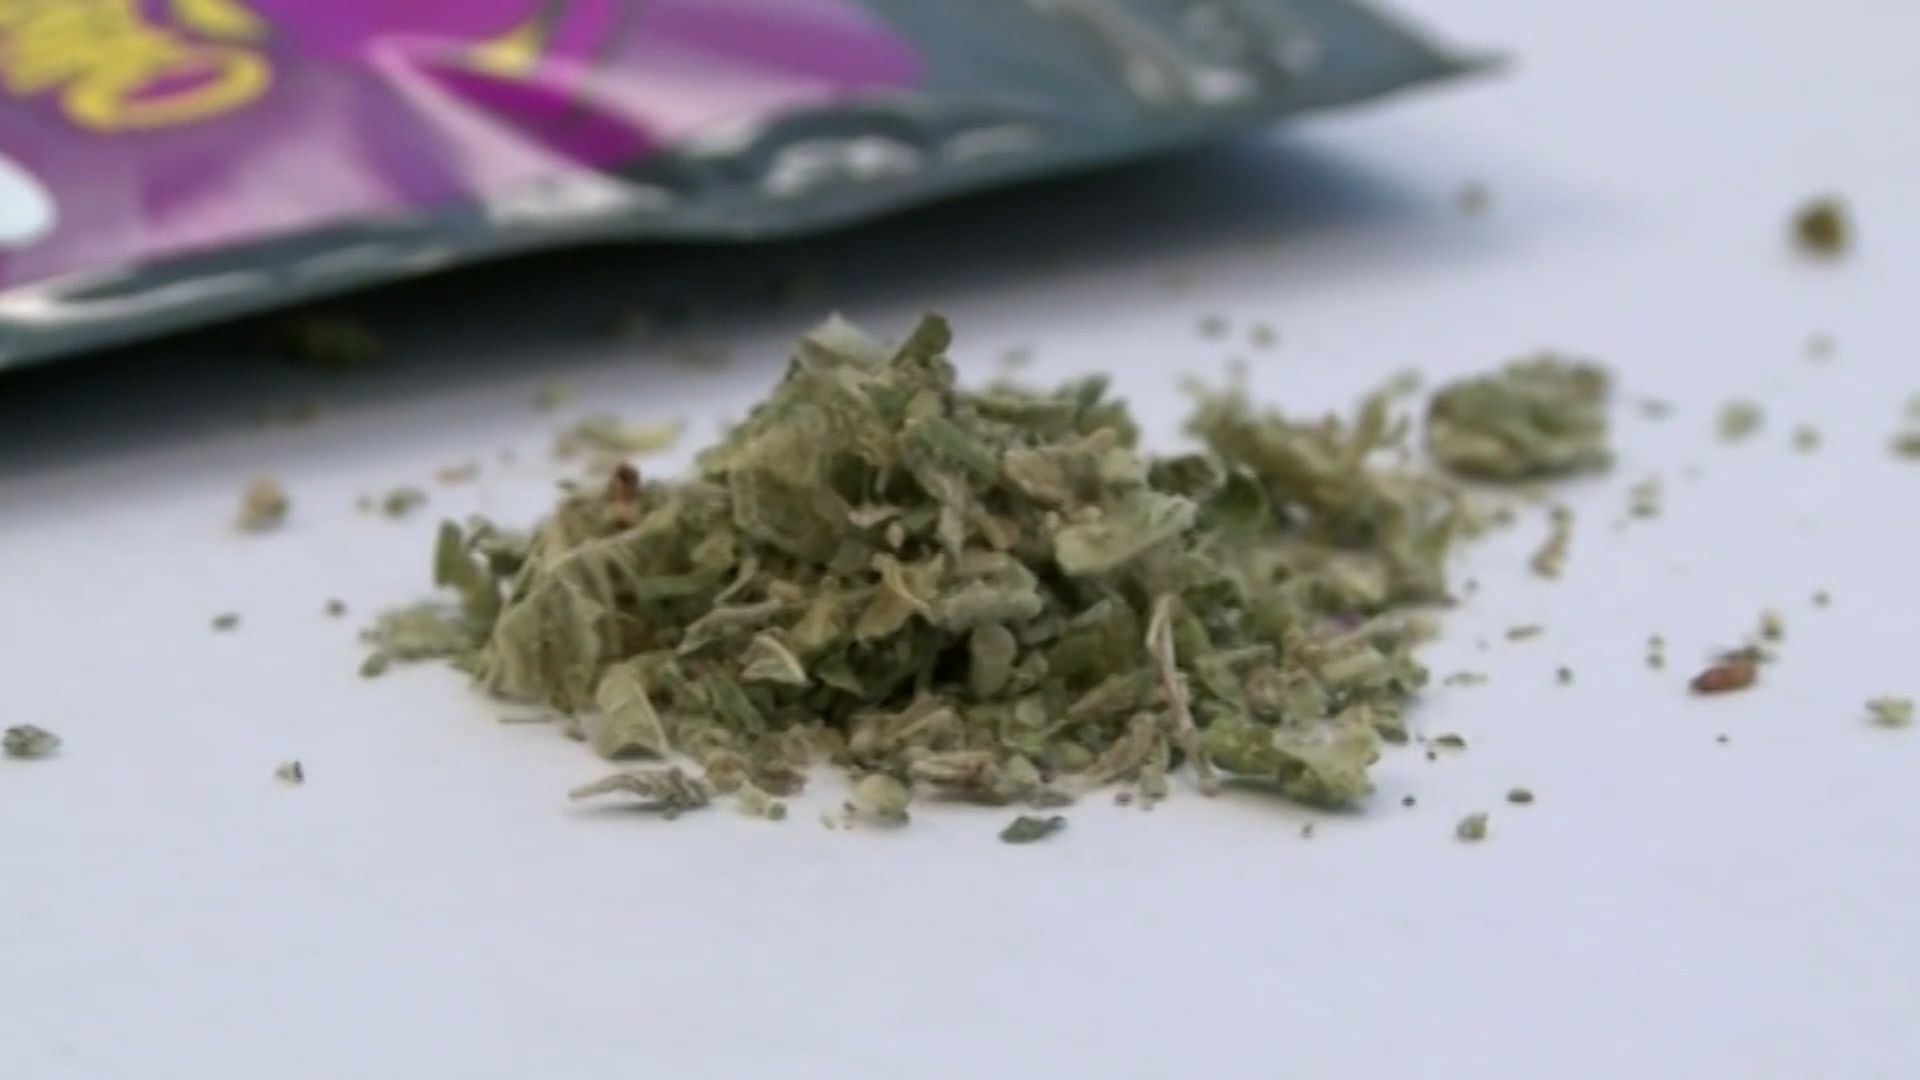 Death linked to fake marijuana in Illinois